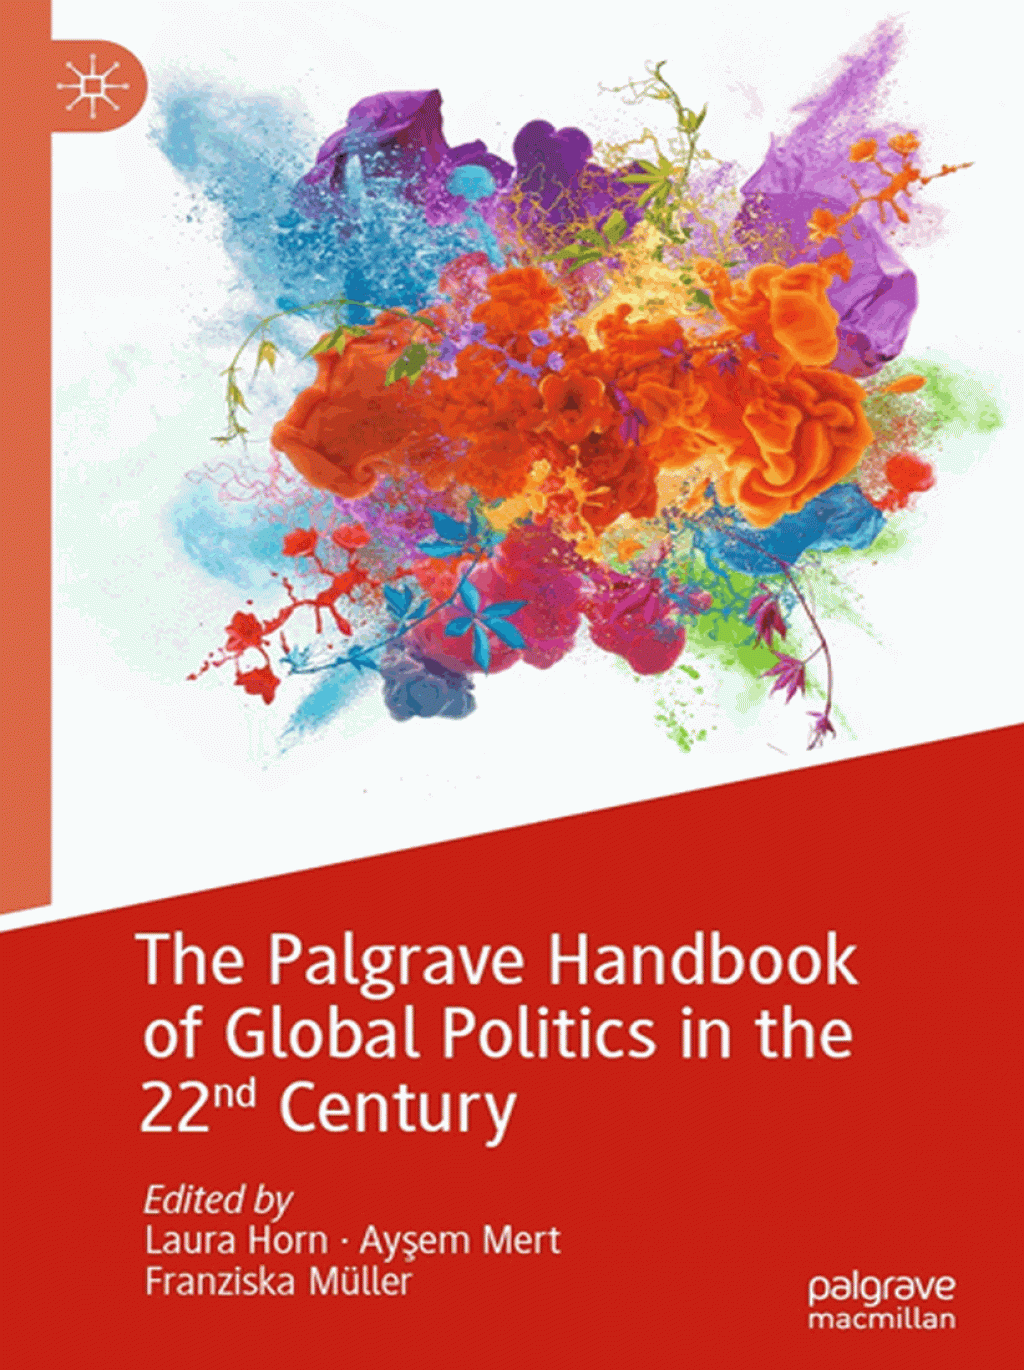 The Palgrave Handbook of Global Politics